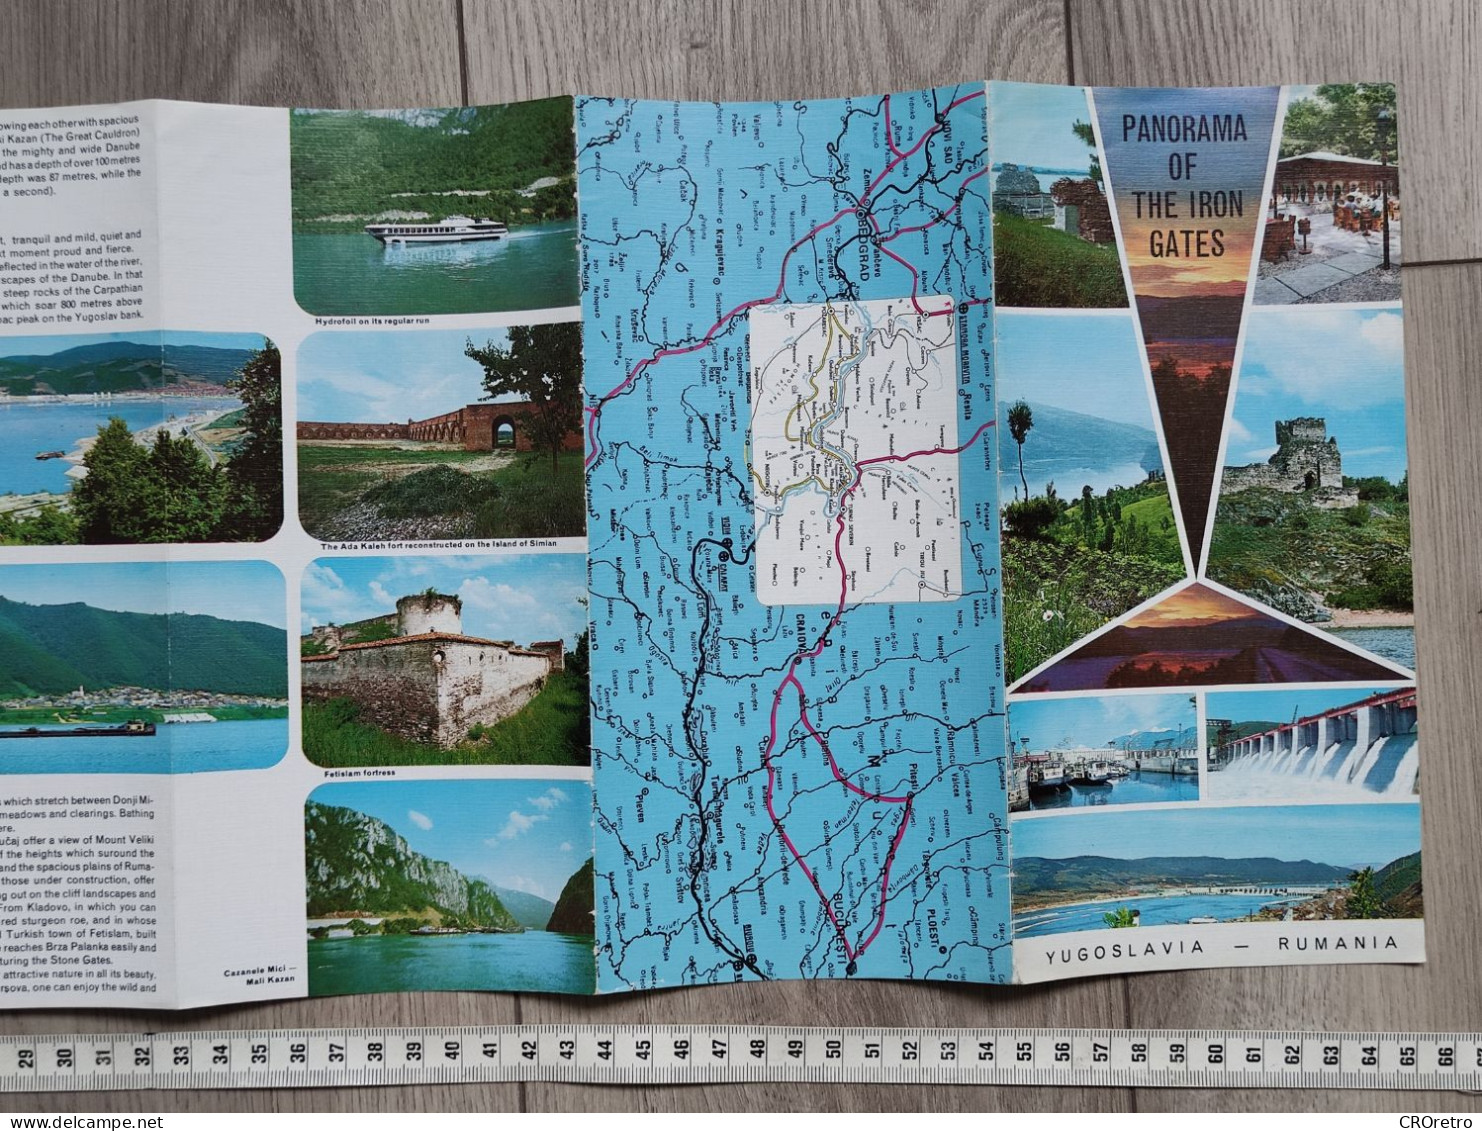 YUGOSLAVIA - ROMANIA, vintage tourism brochure, prospect, guide (pro3)